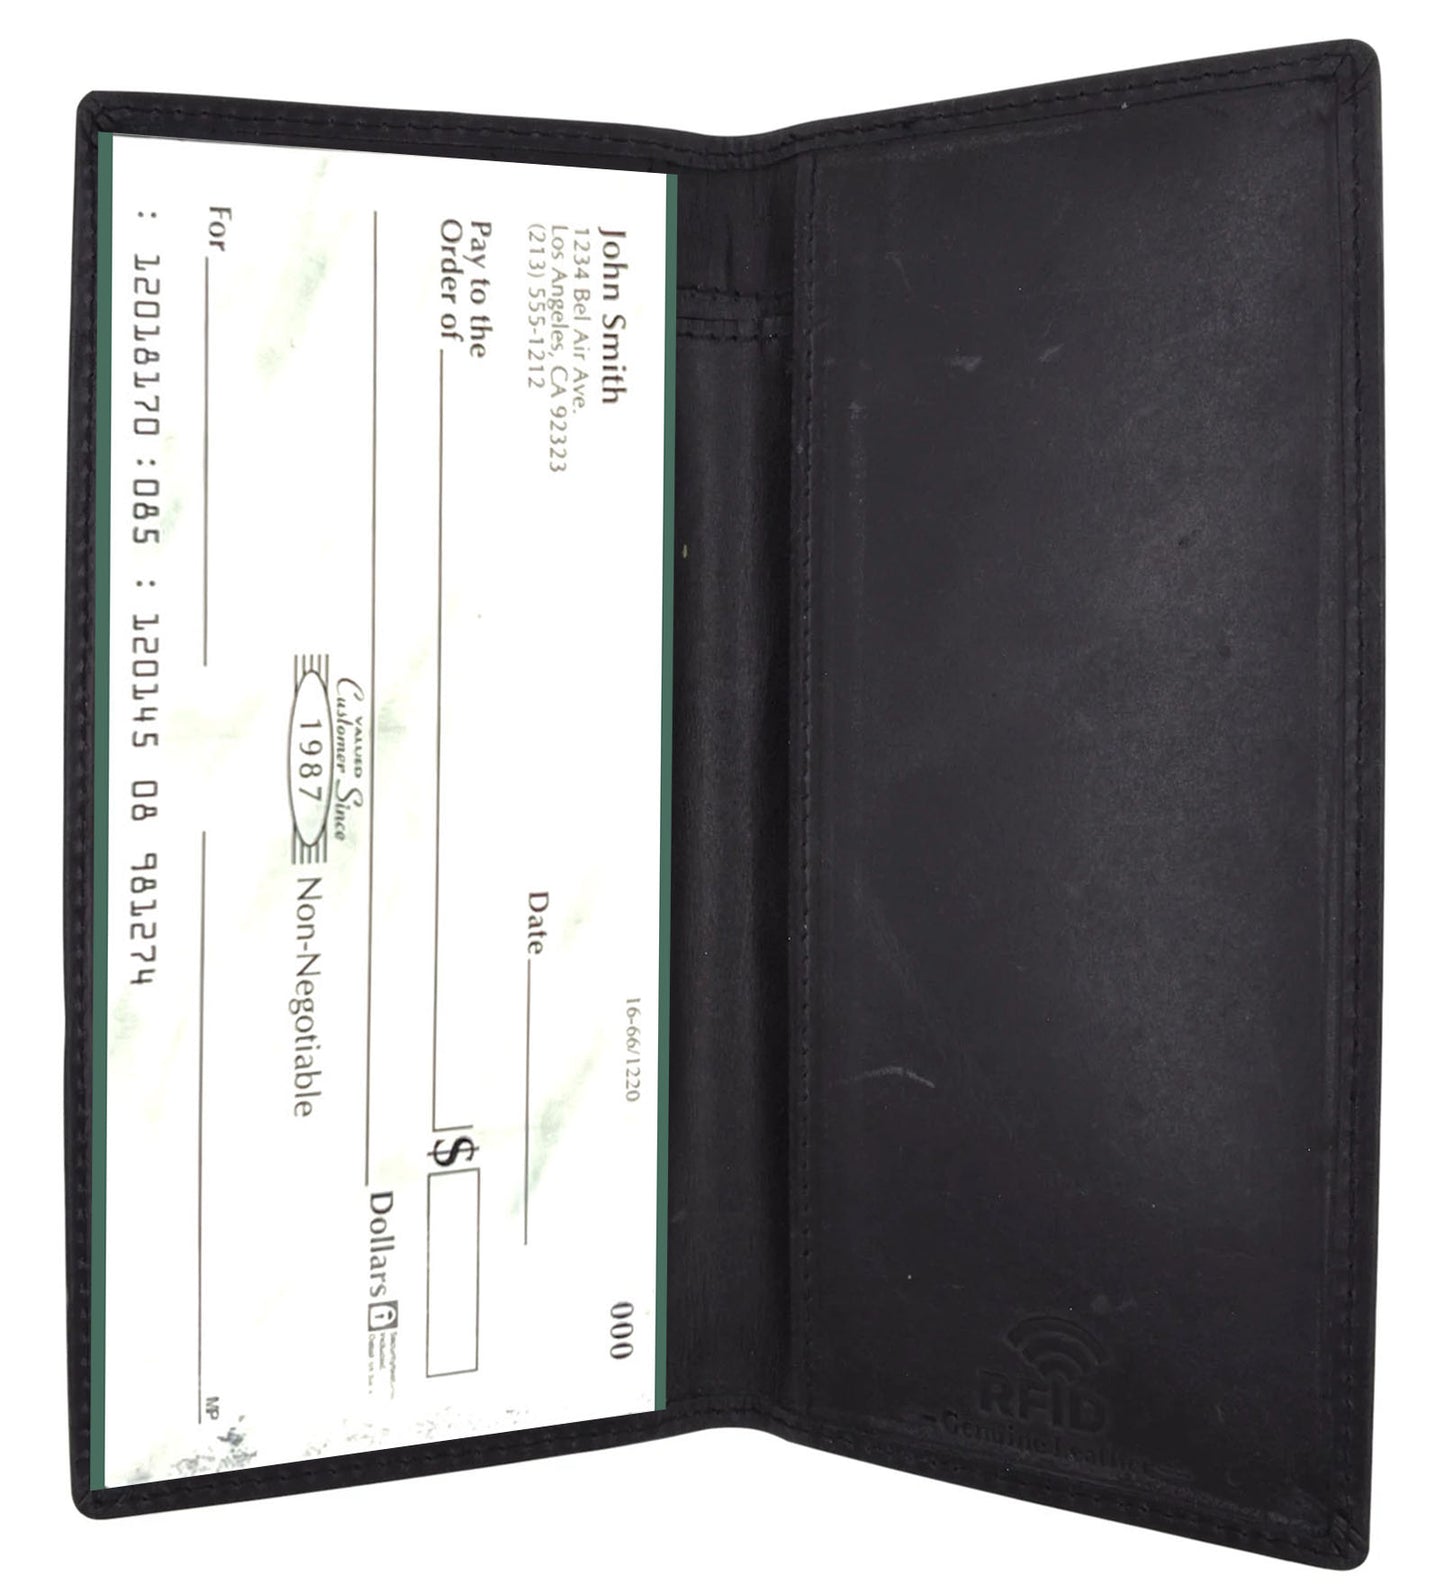 Hunter Brown RFID Blocking Genuine Leather Standard Checkbook Cover Holder Thin Wallet Men Women